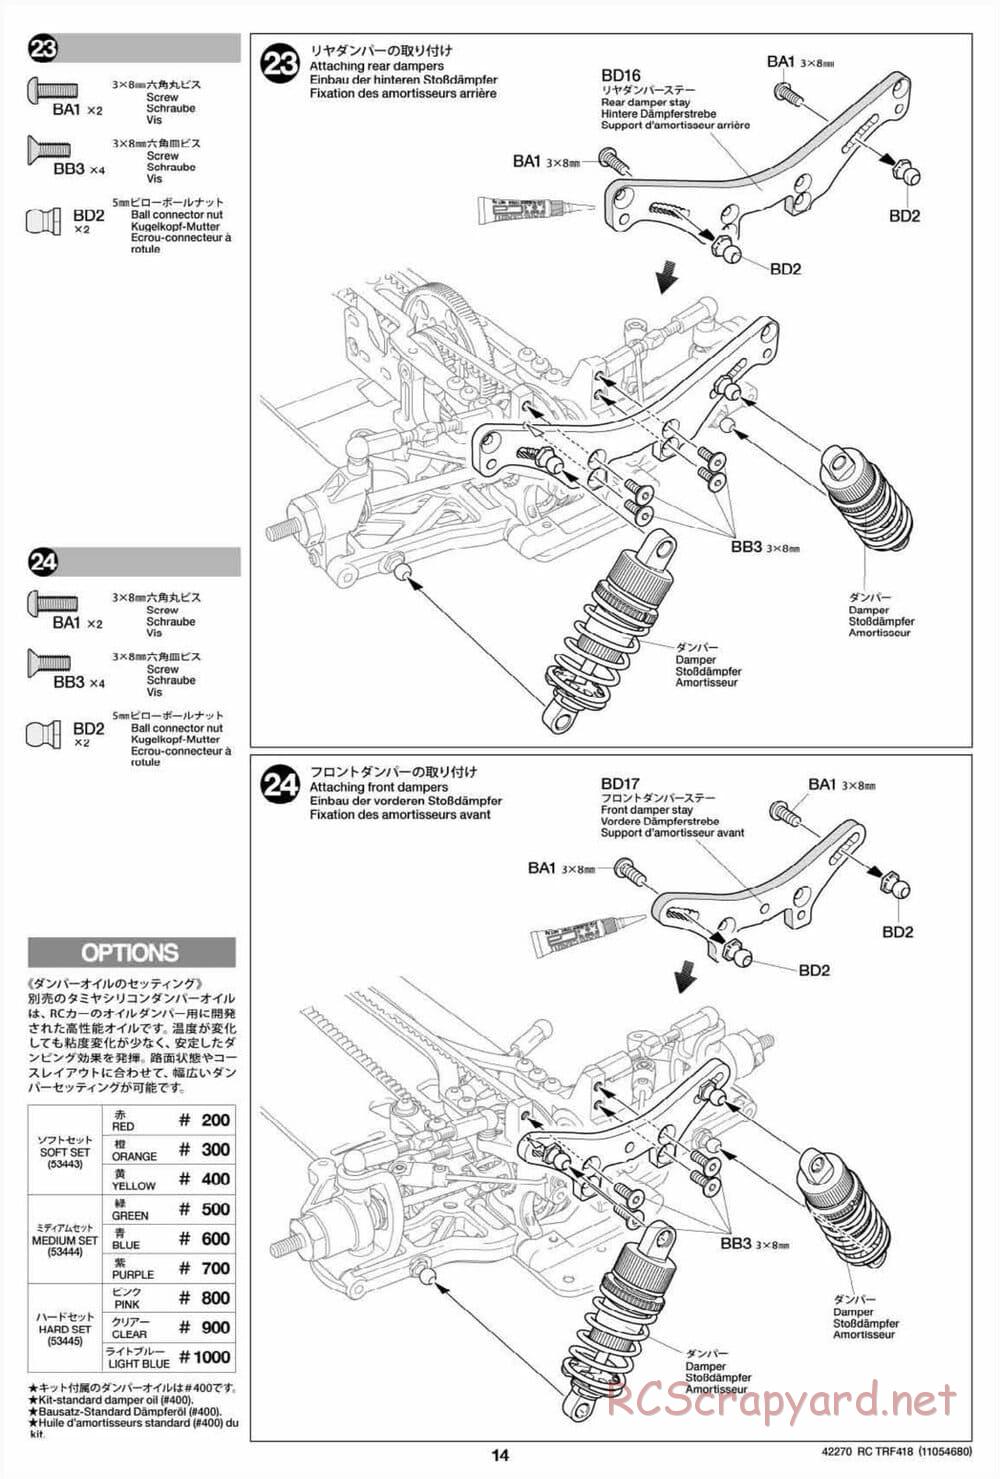 Tamiya - TRF418 Chassis - Manual - Page 14